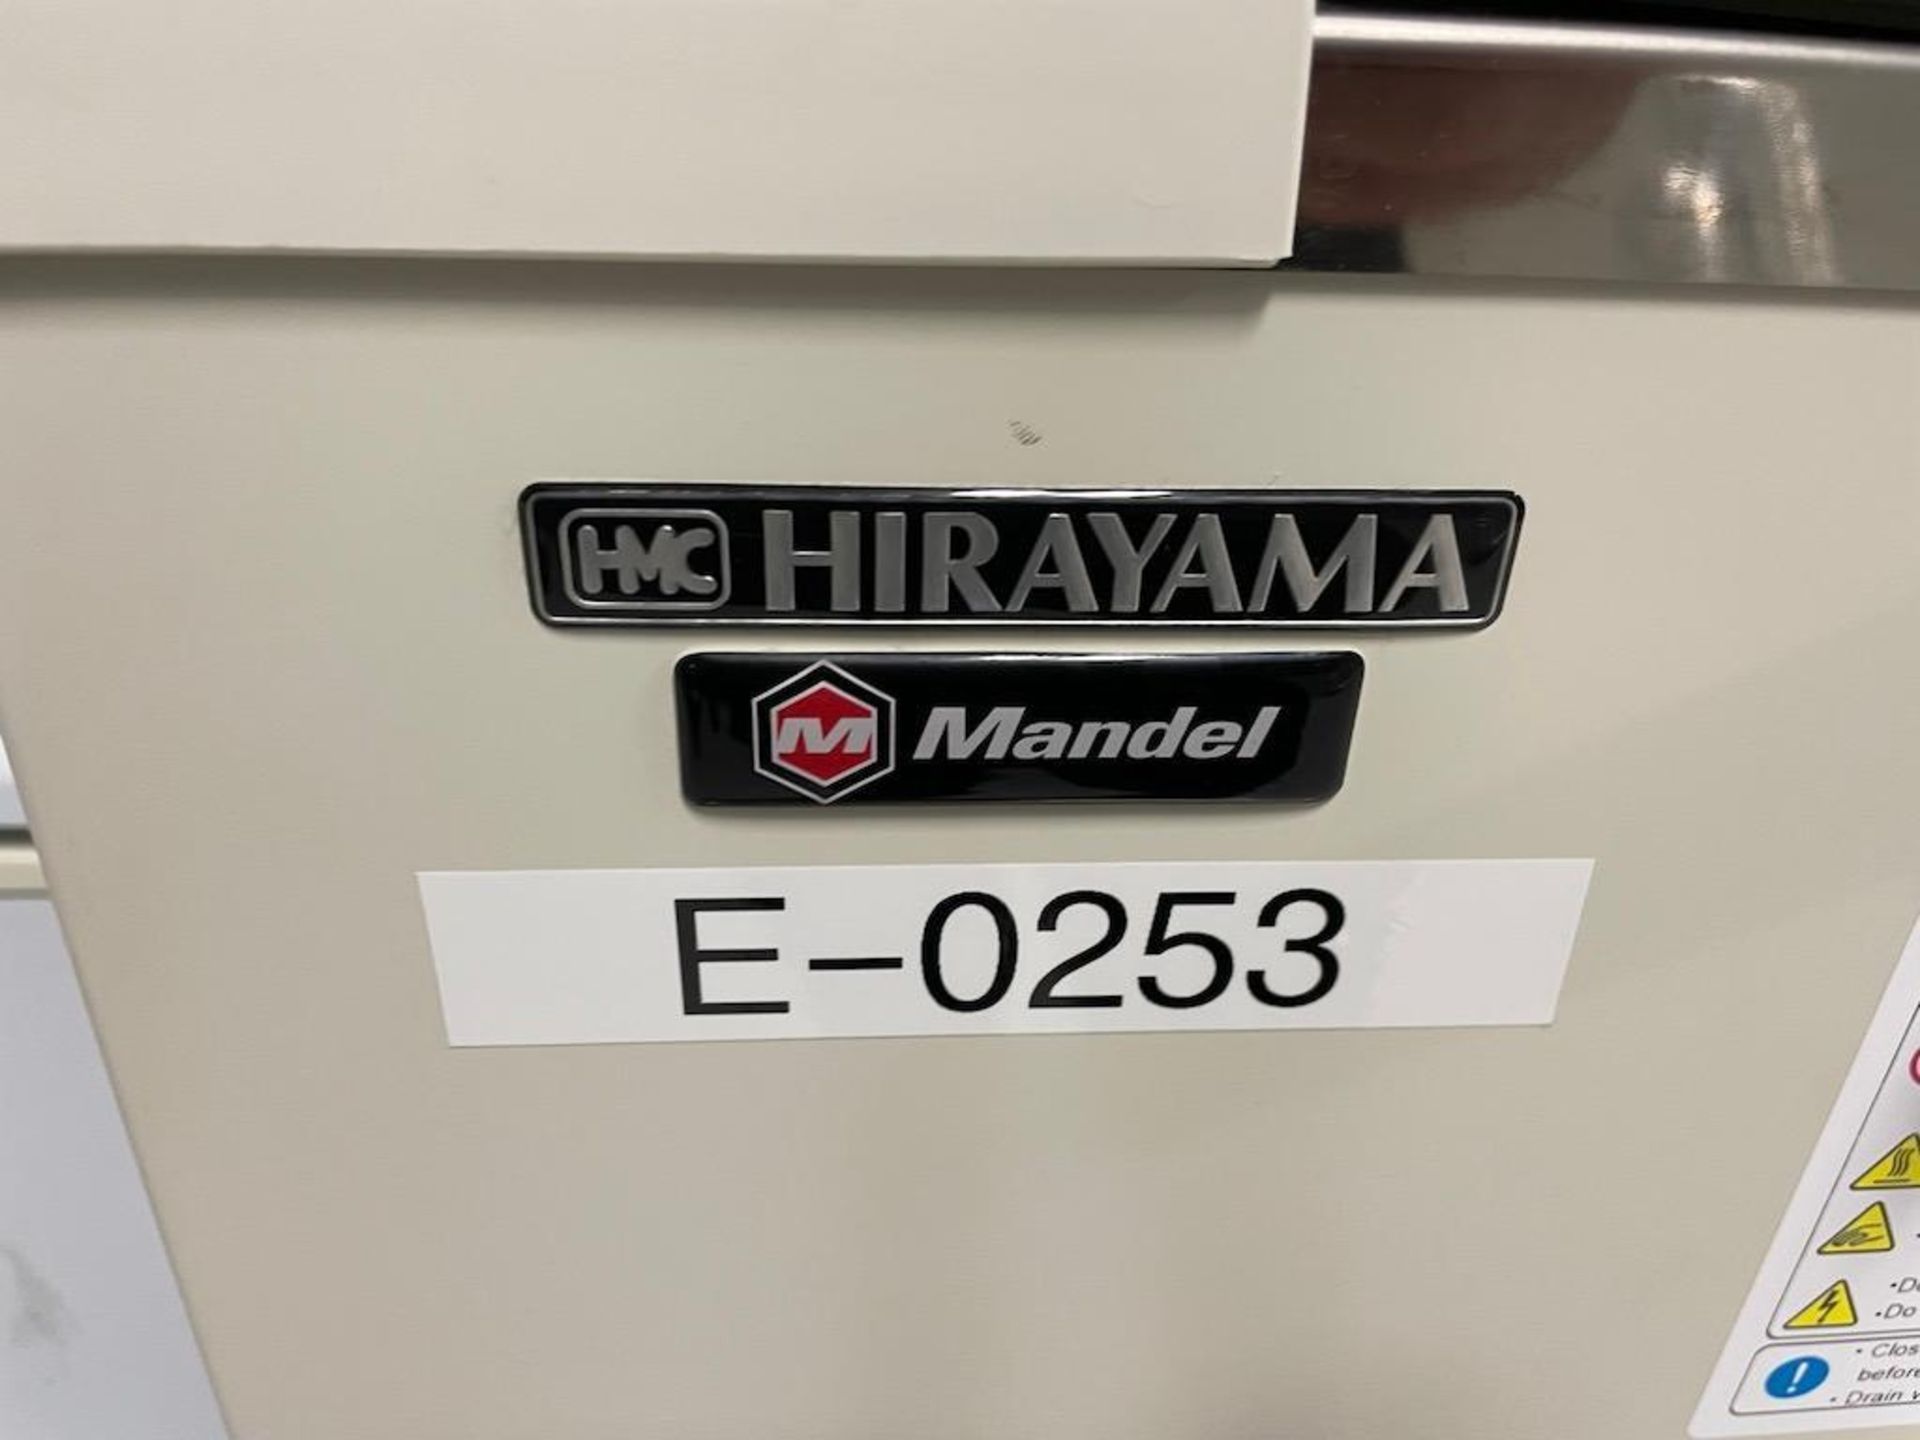 2018 HIRAYAMA AUTOCLAVE MODEL HICLAVE HVA-110, SN 31918051712 - Image 2 of 7